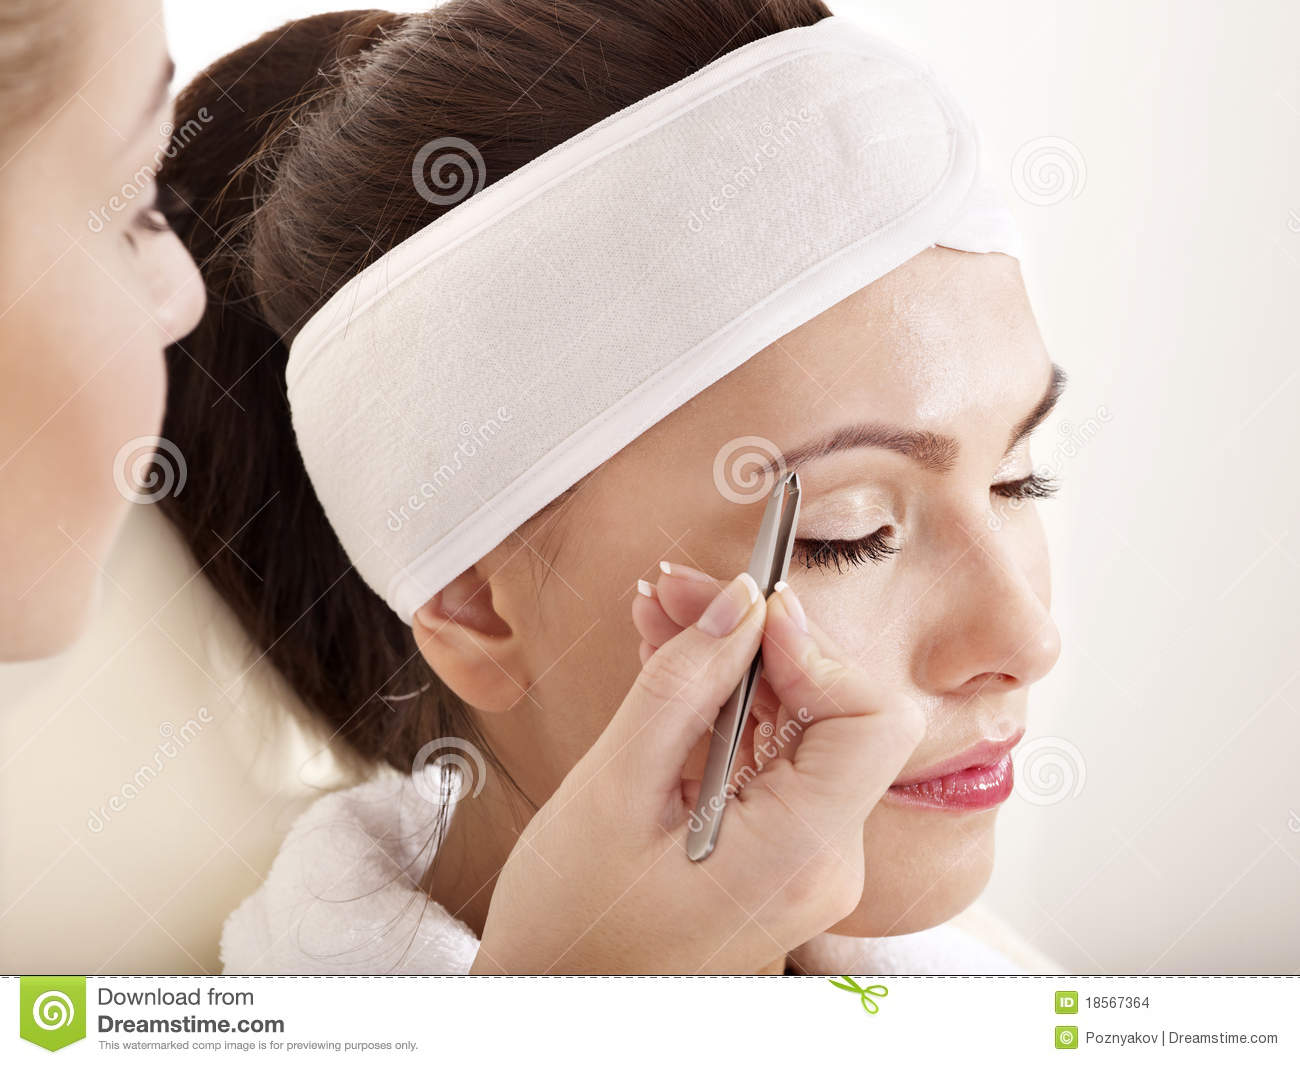 Tweezing Eyebrow By Beautician  Stock Images   Image  18567364